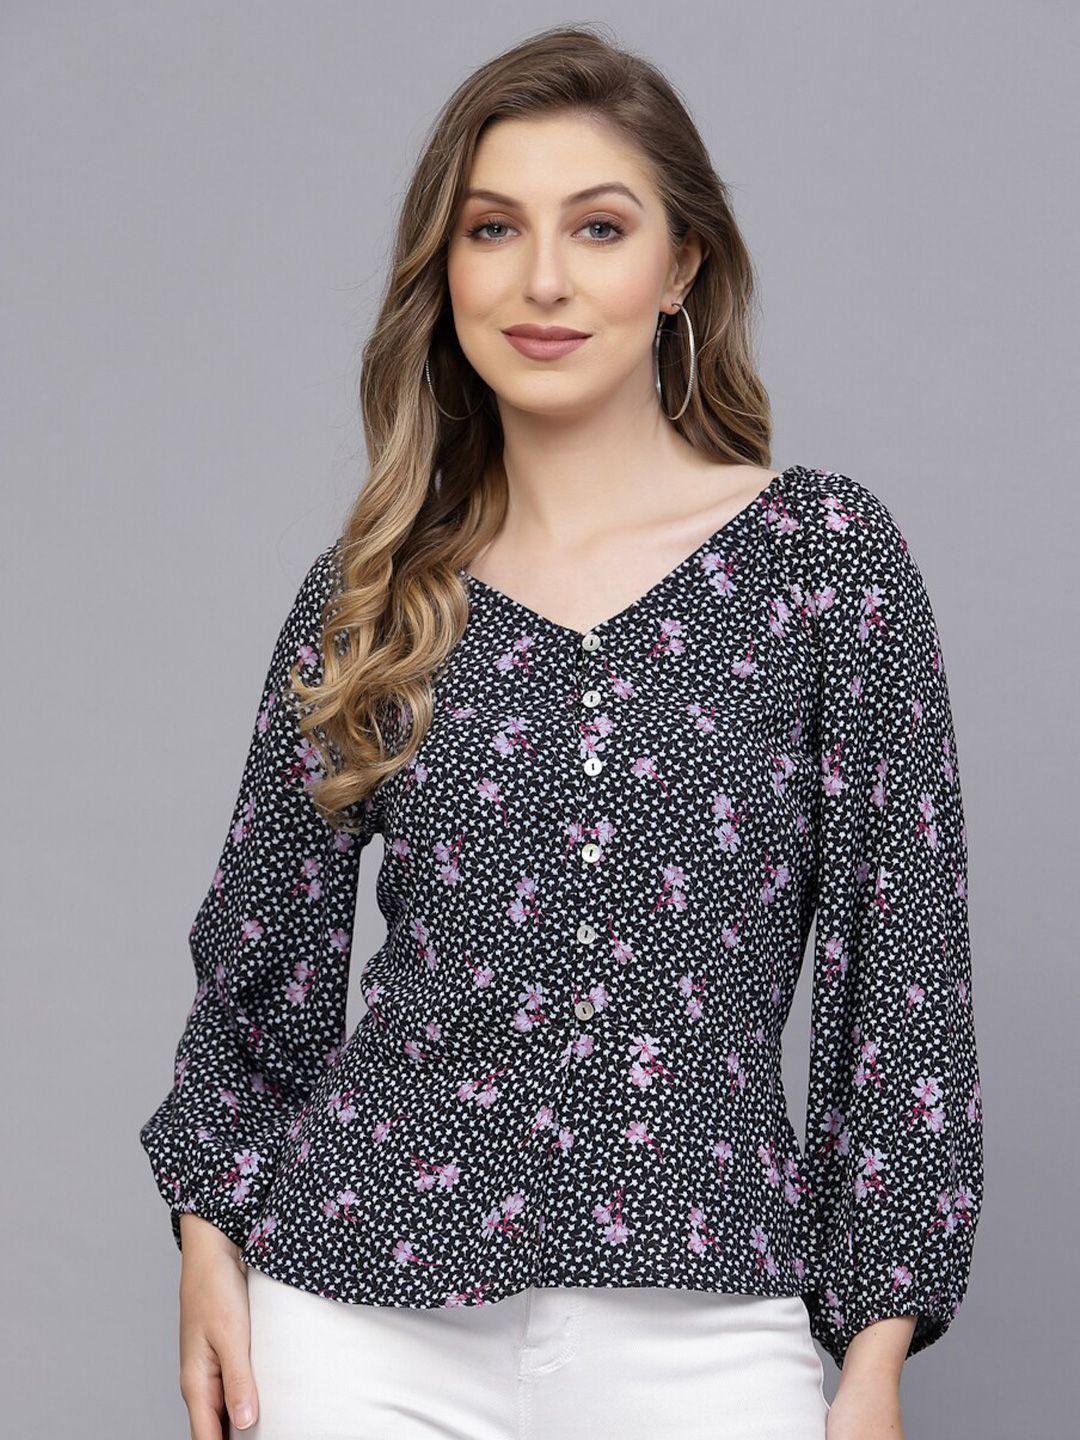 valbone floral printed shirt style top